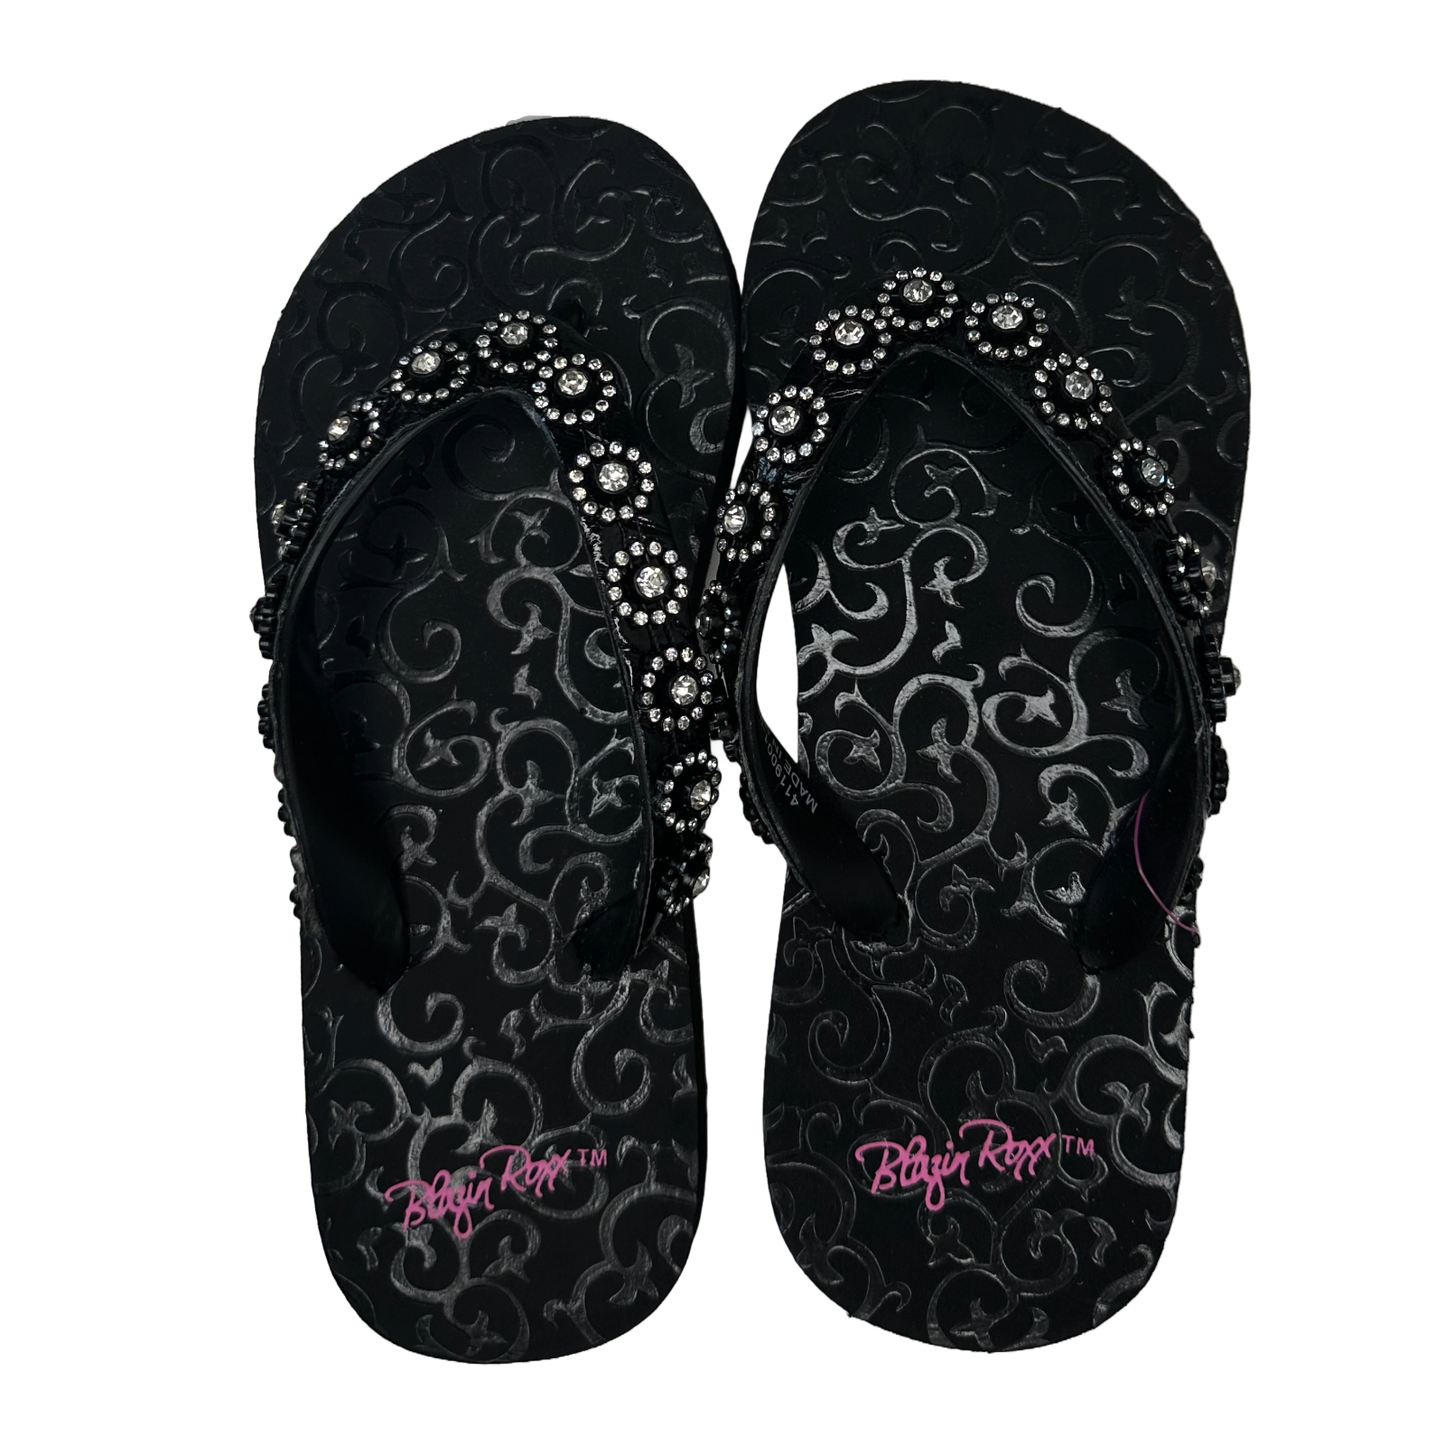 Blazin Roxx Ladies Black Studded Diamond Flip Flop Sandals 4119001